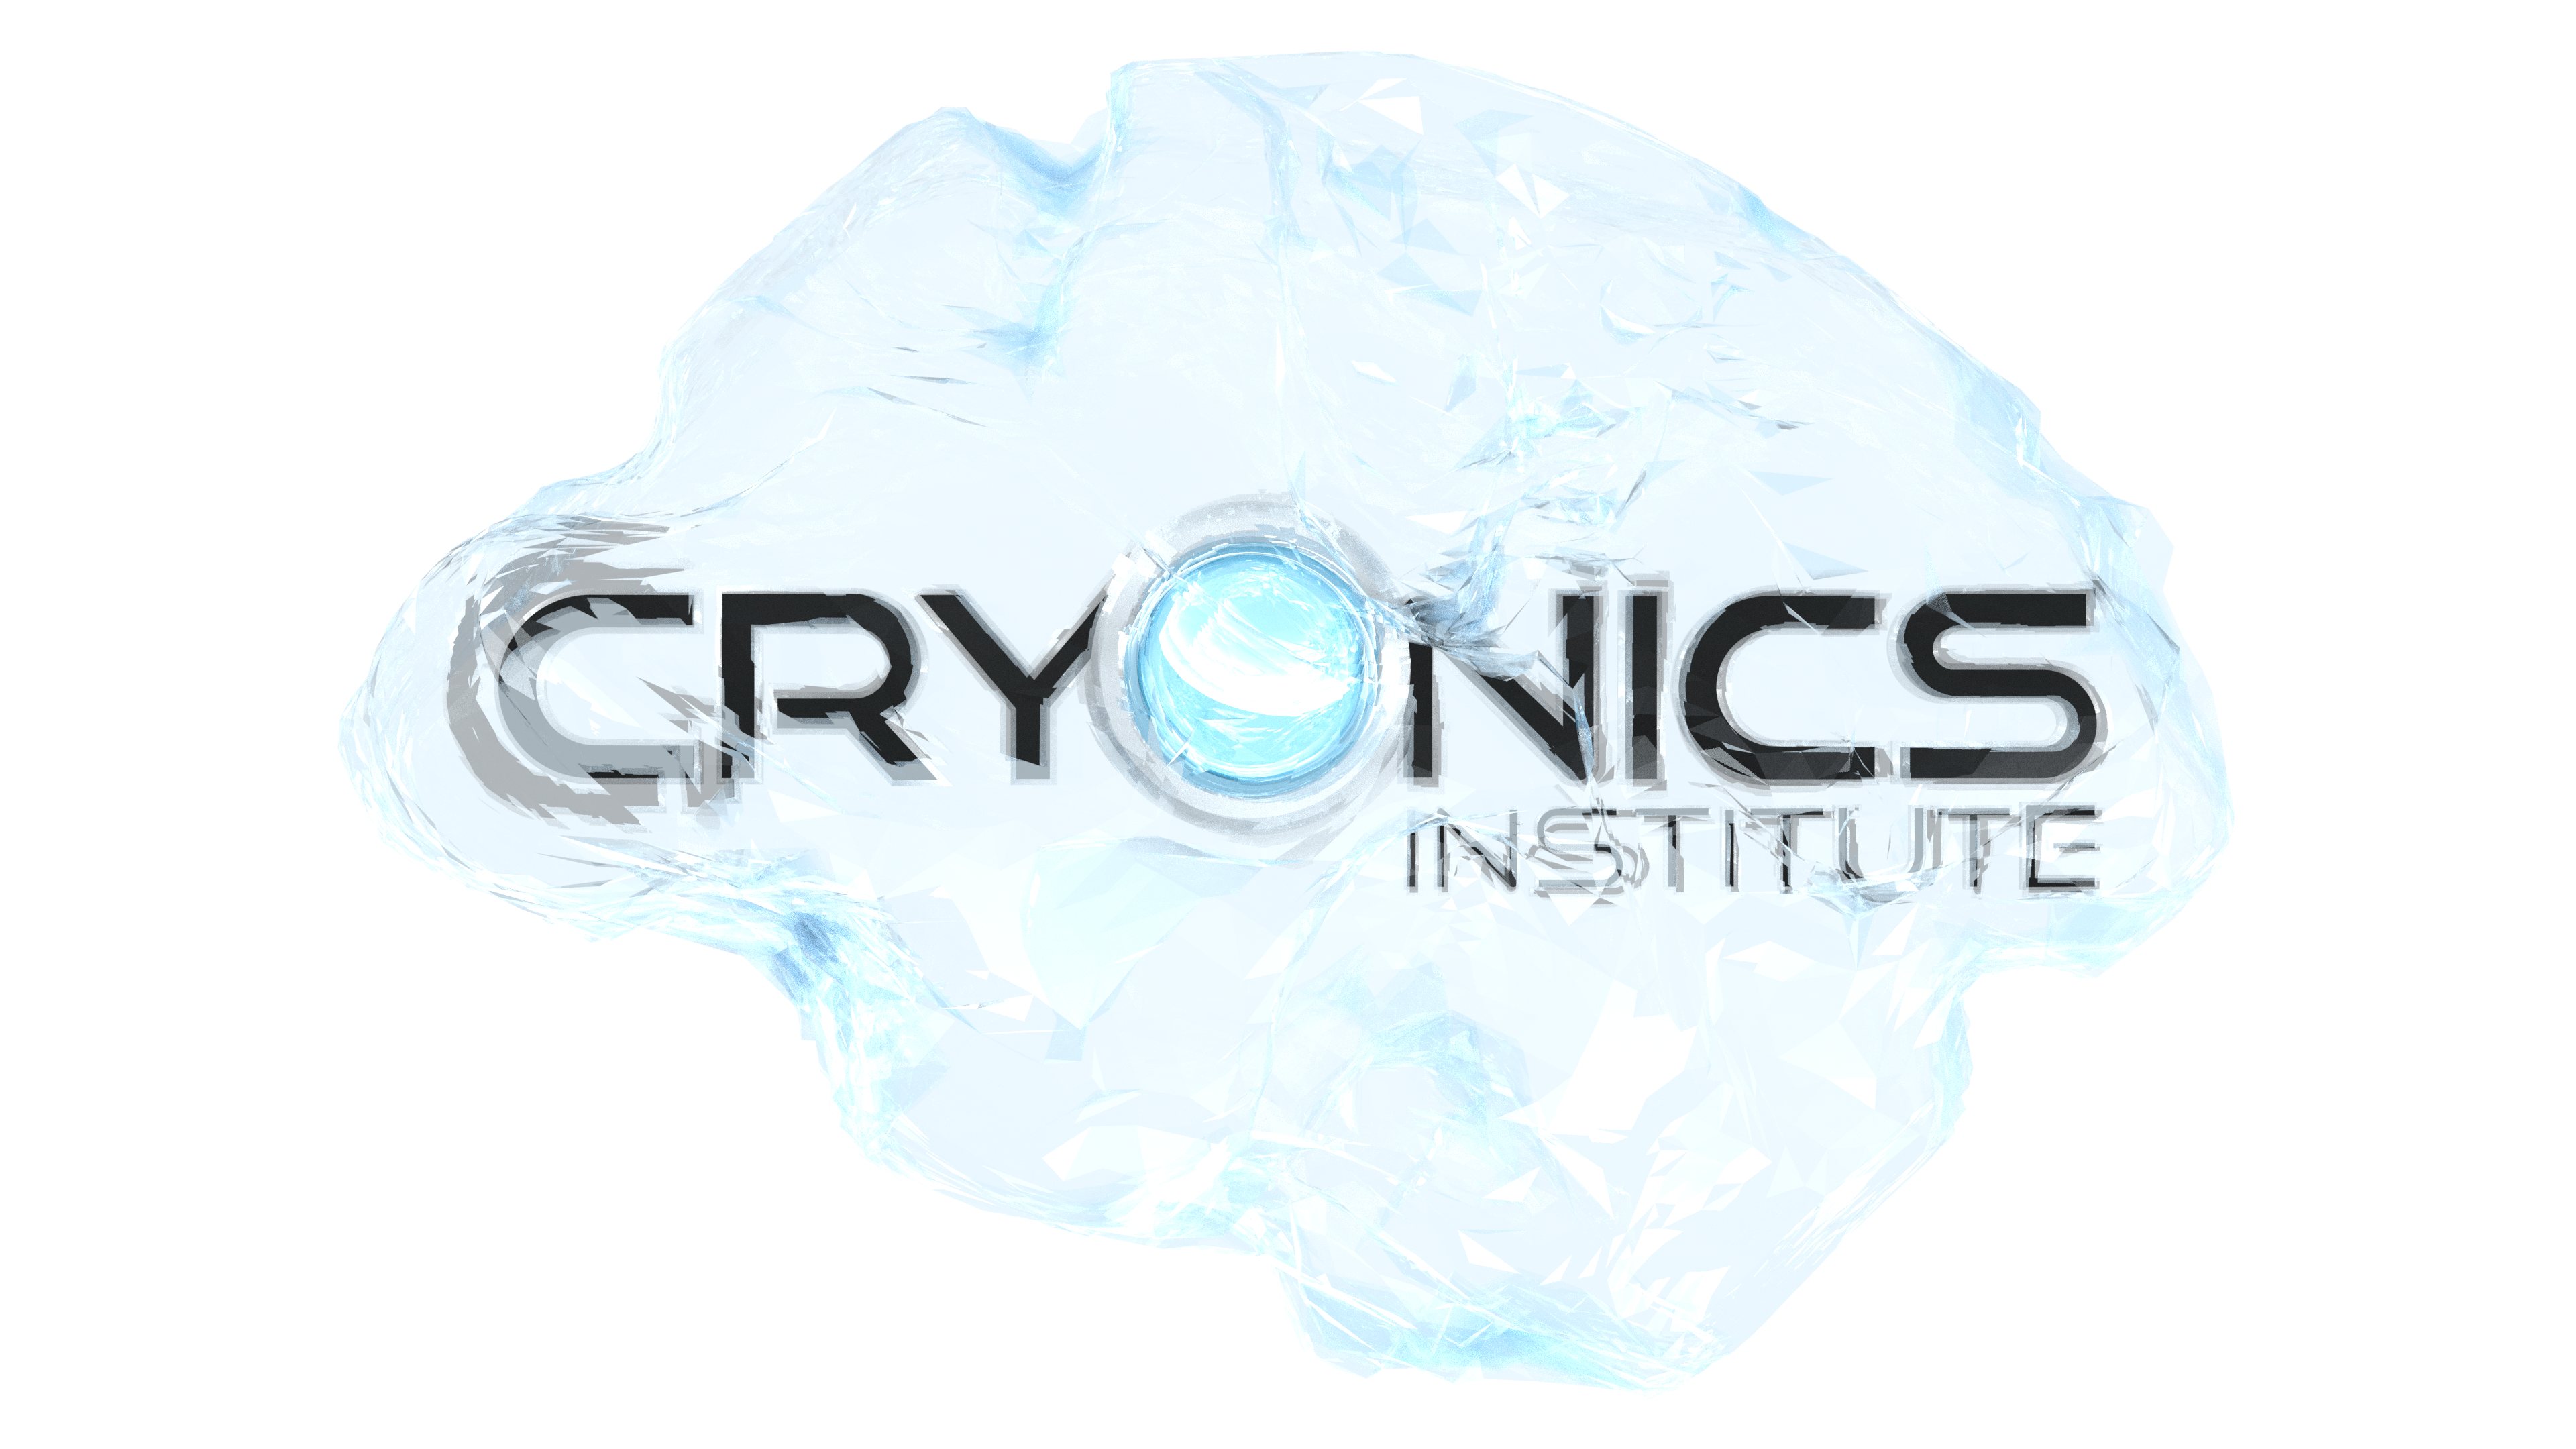 General 3840x2160 Cryonics Institute Cryonics digital art